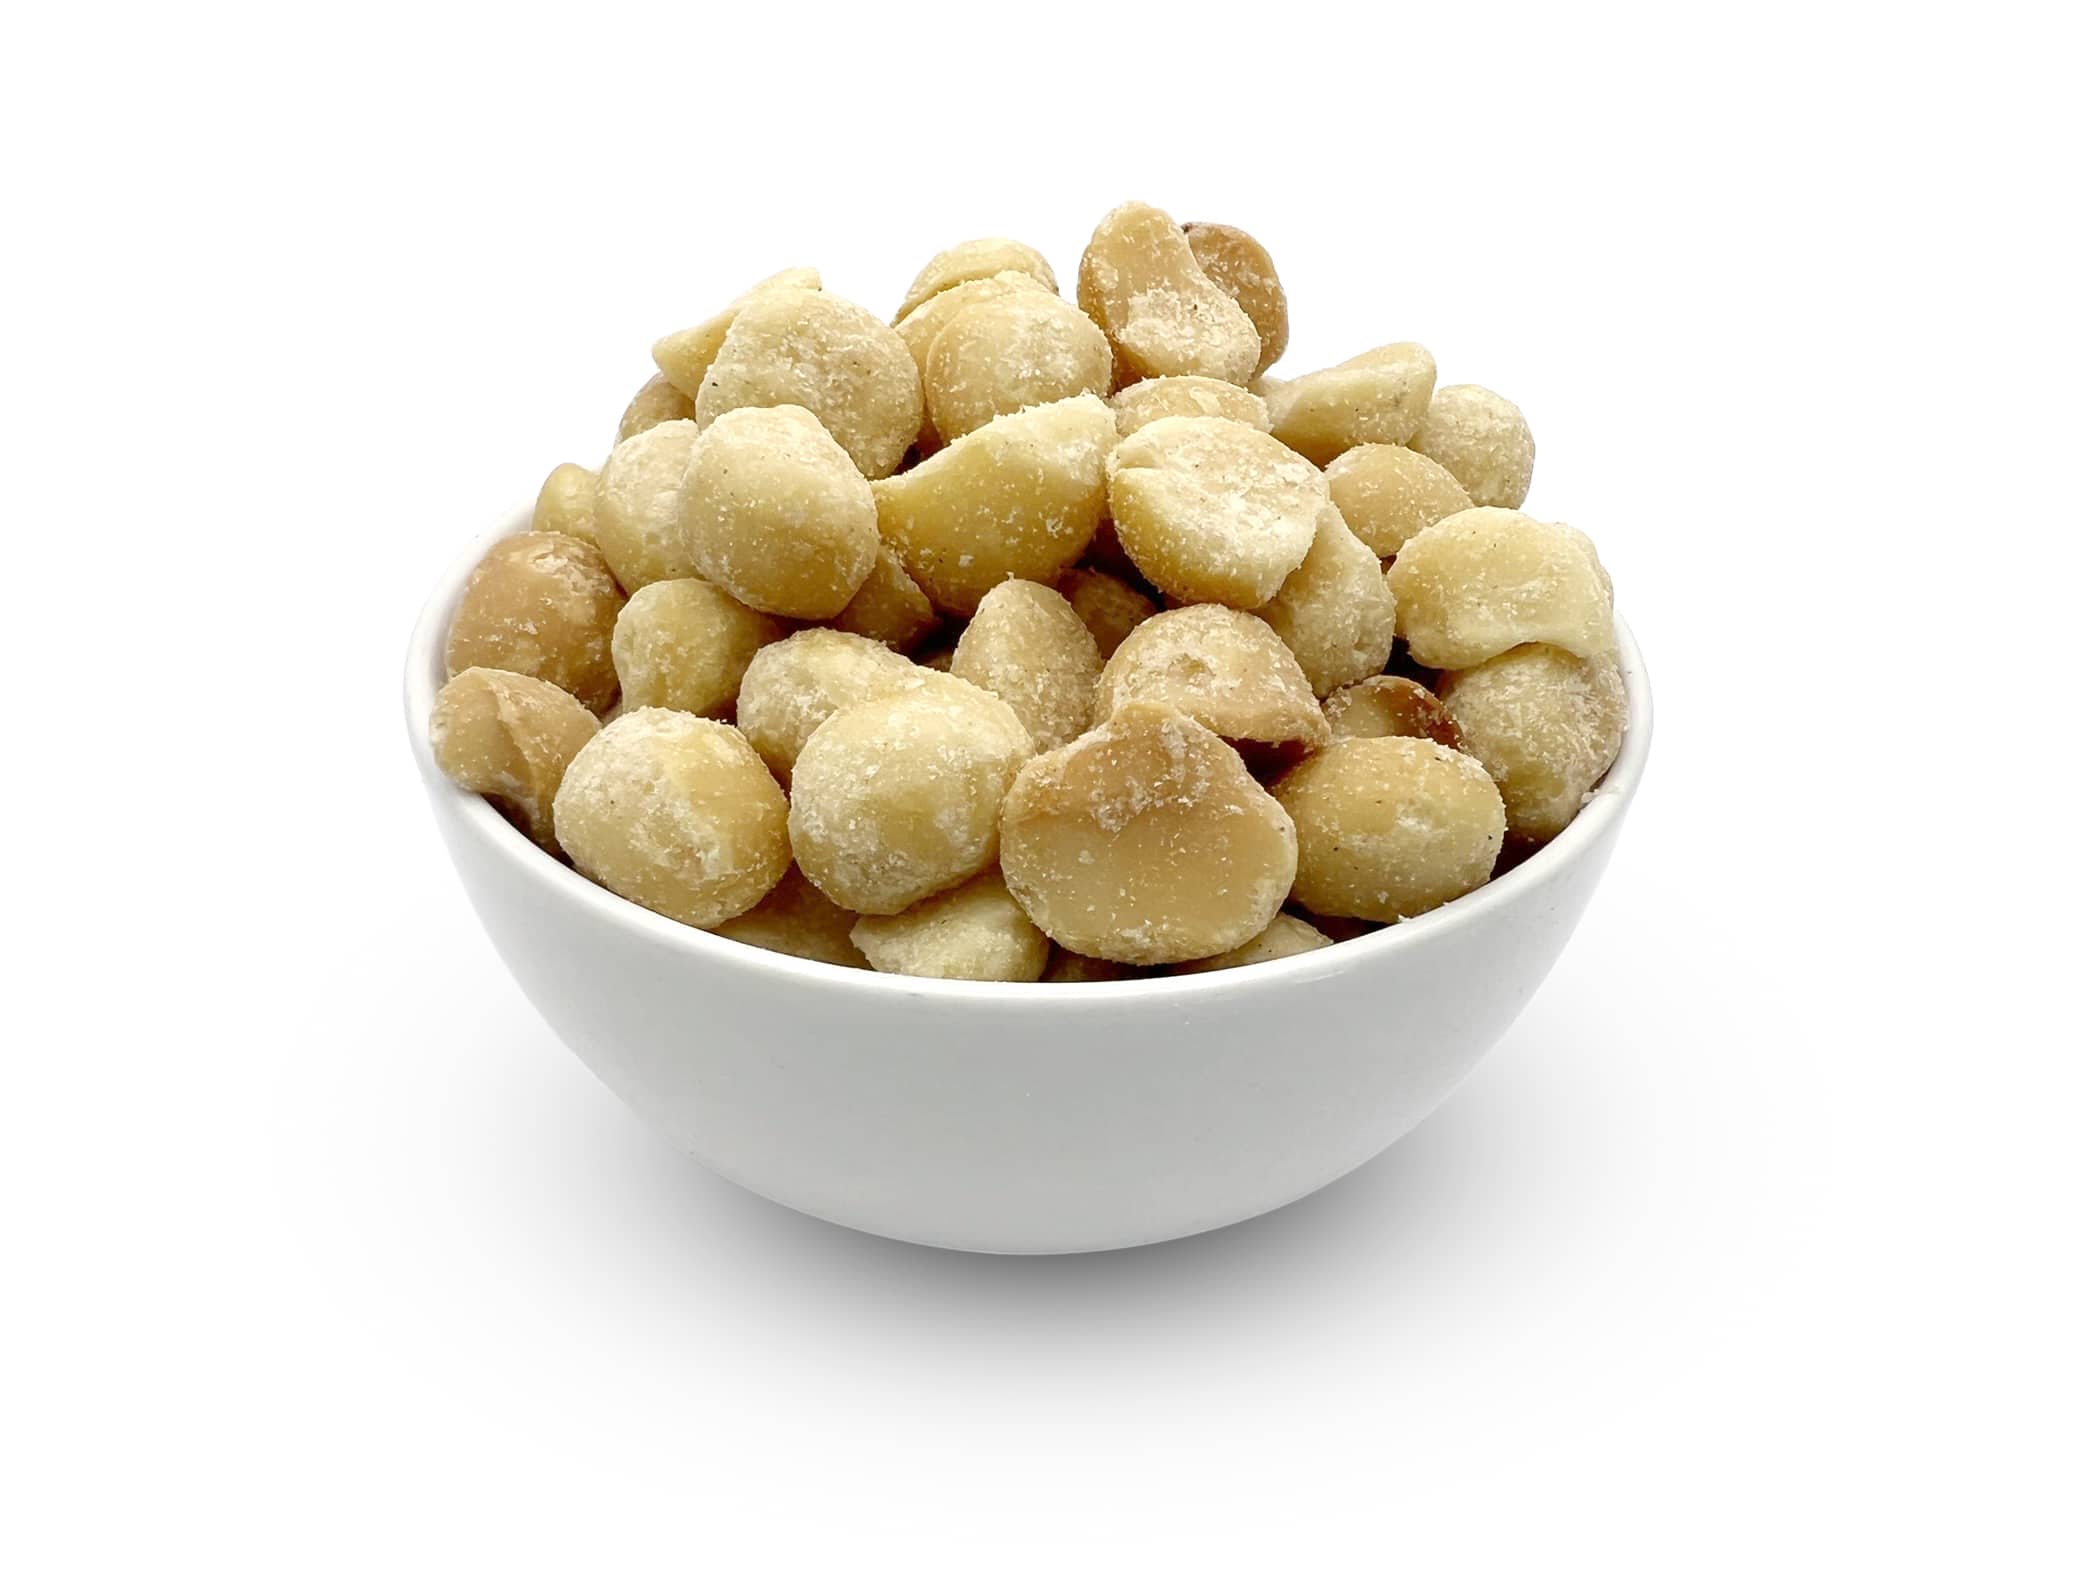 kidney friendly macadamia nuts